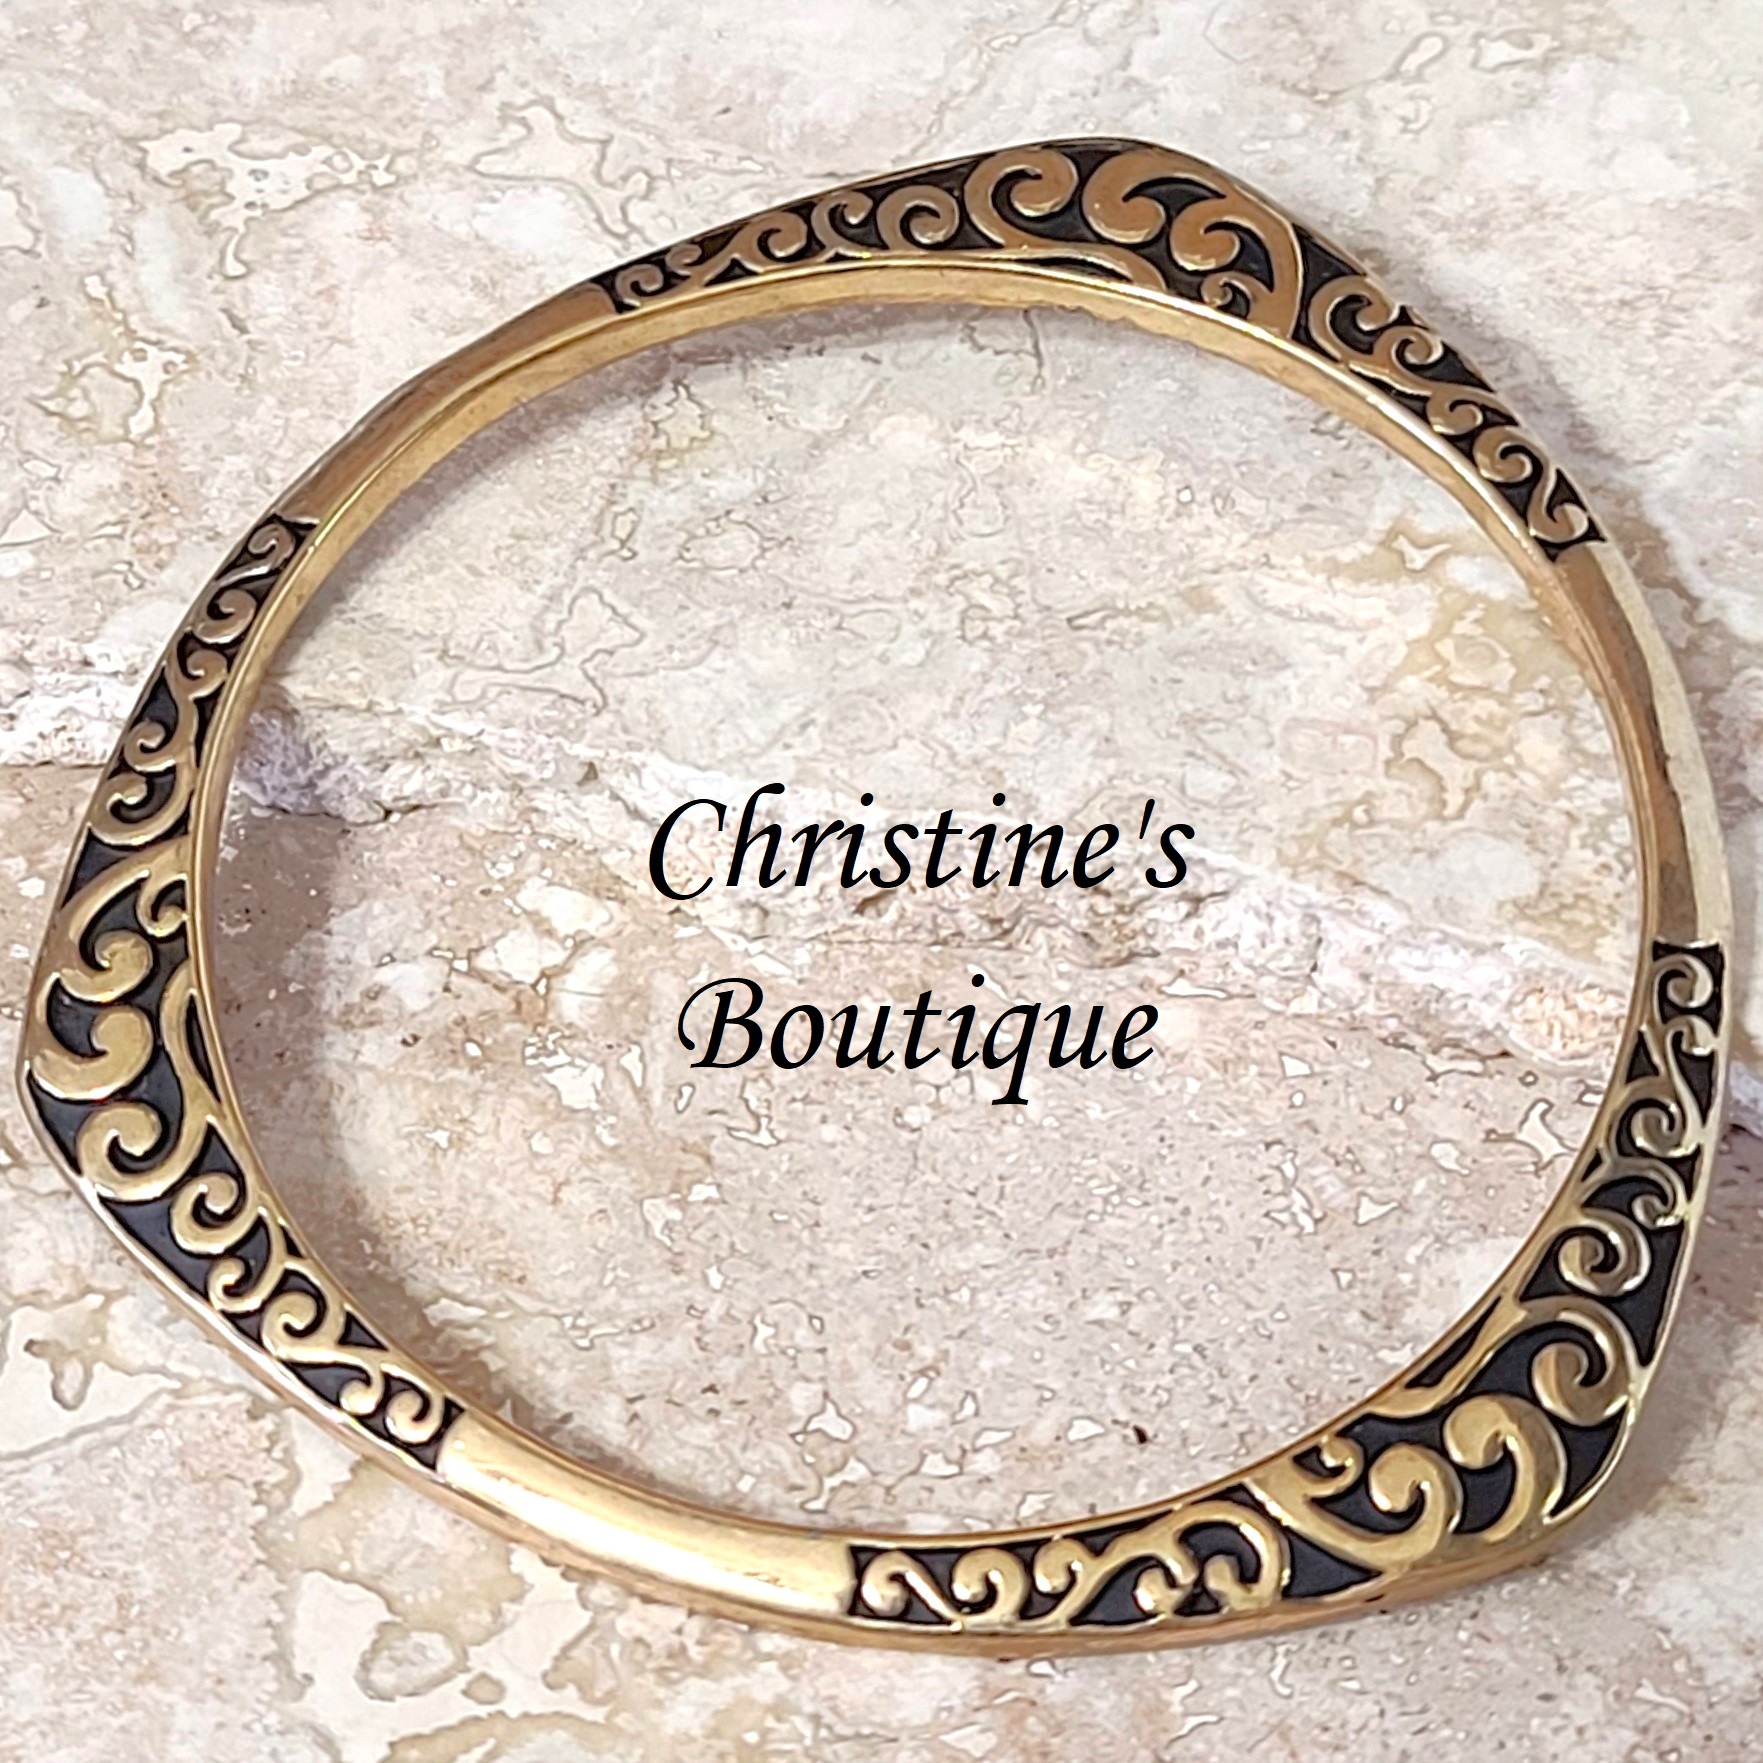 Flat bangle bracelet, fashion bracelet goldtone with black scrolled design - Click Image to Close